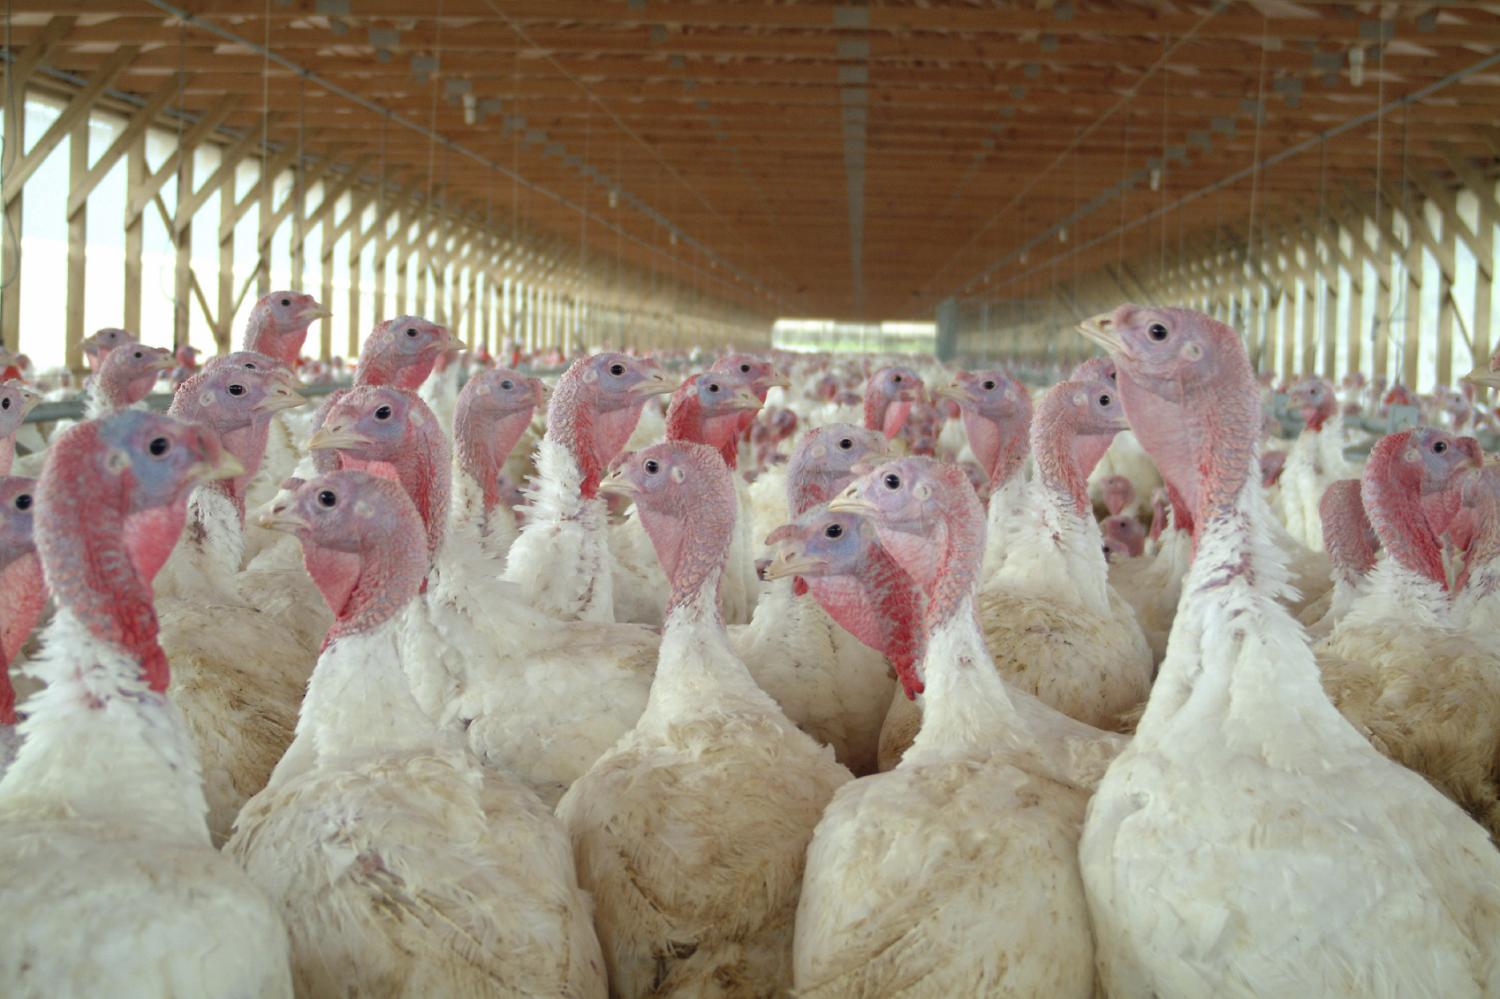 Turkey flock in farm building